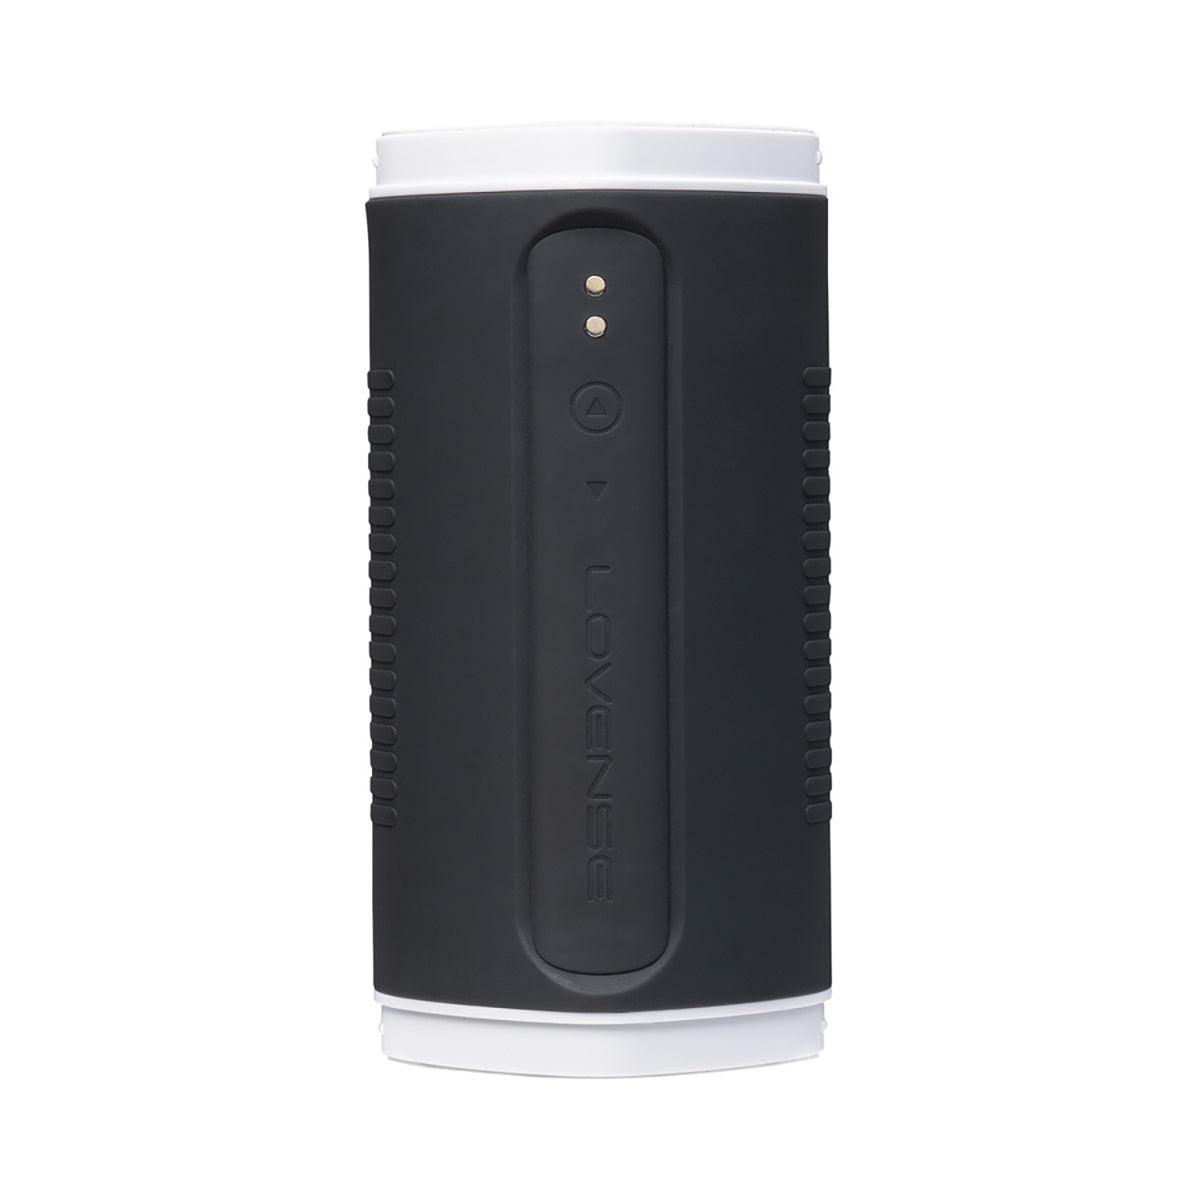 Lovense Calor Bluetooth Depth-Controlled Vibrating and Heating Masturbator - Zateo Joy